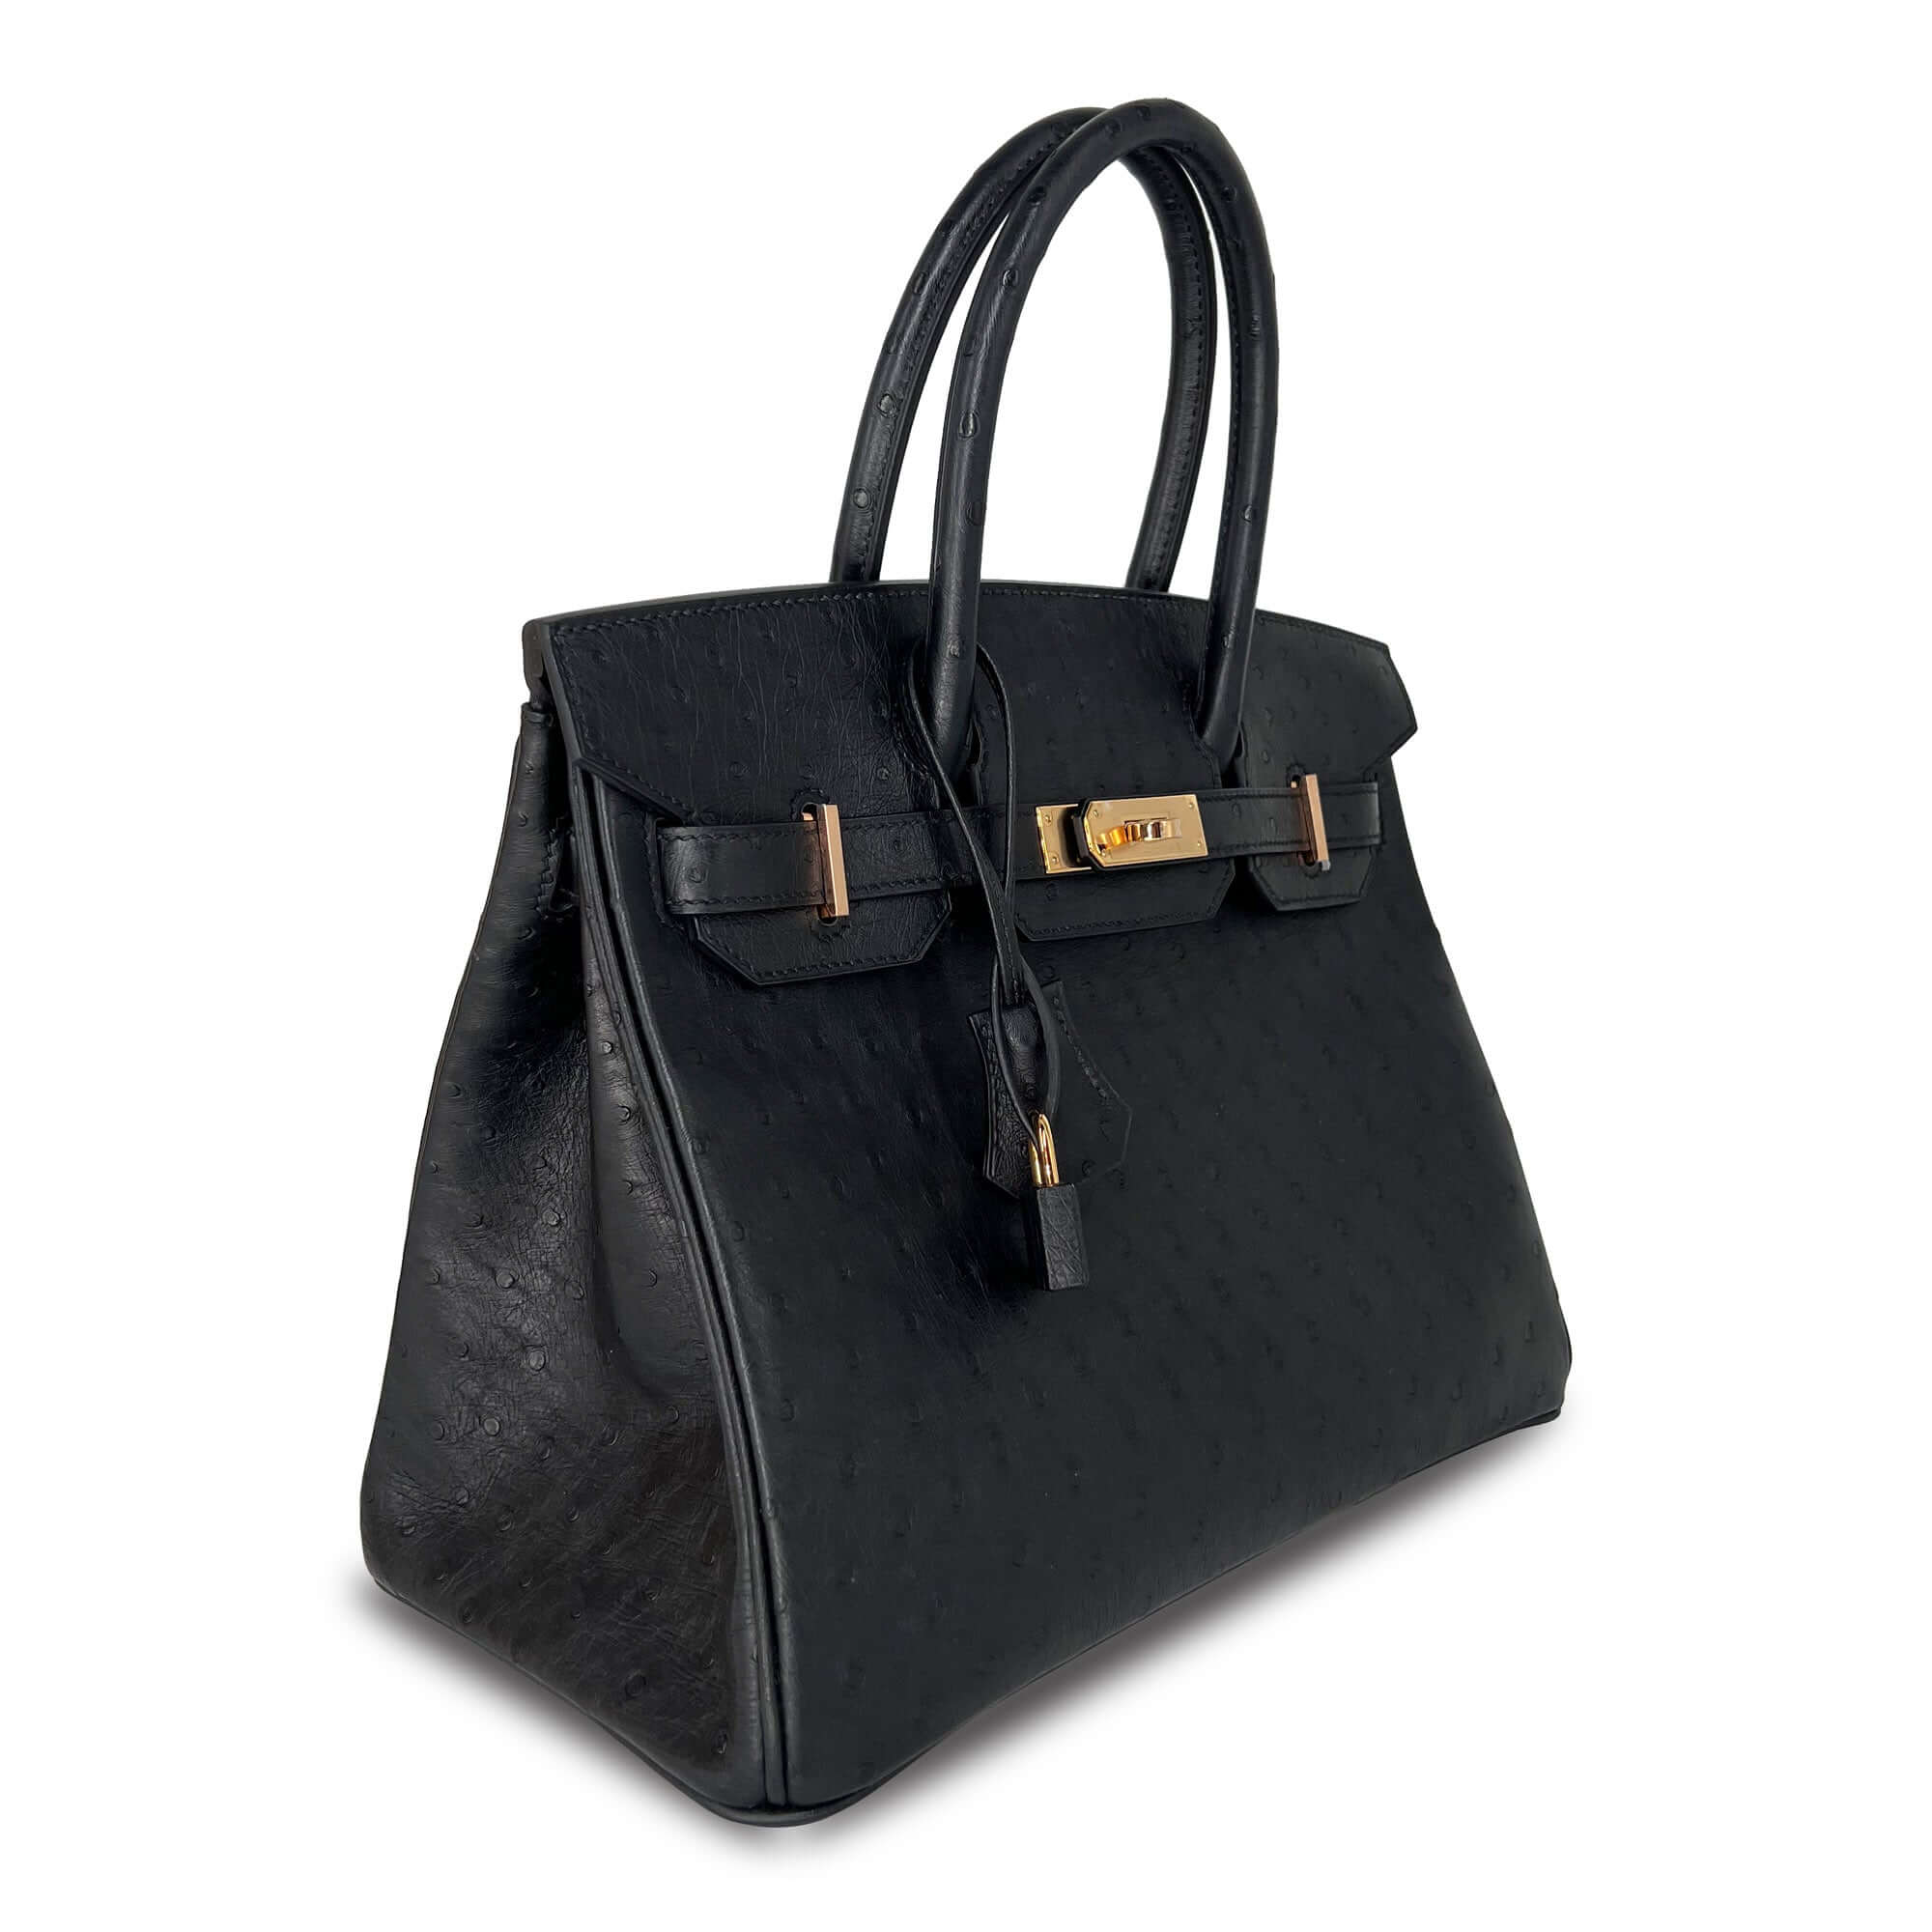 Authentic Hermes Brown Togo Leather and Toile Canvas Birkin 30 Bag – Paris  Station Shop